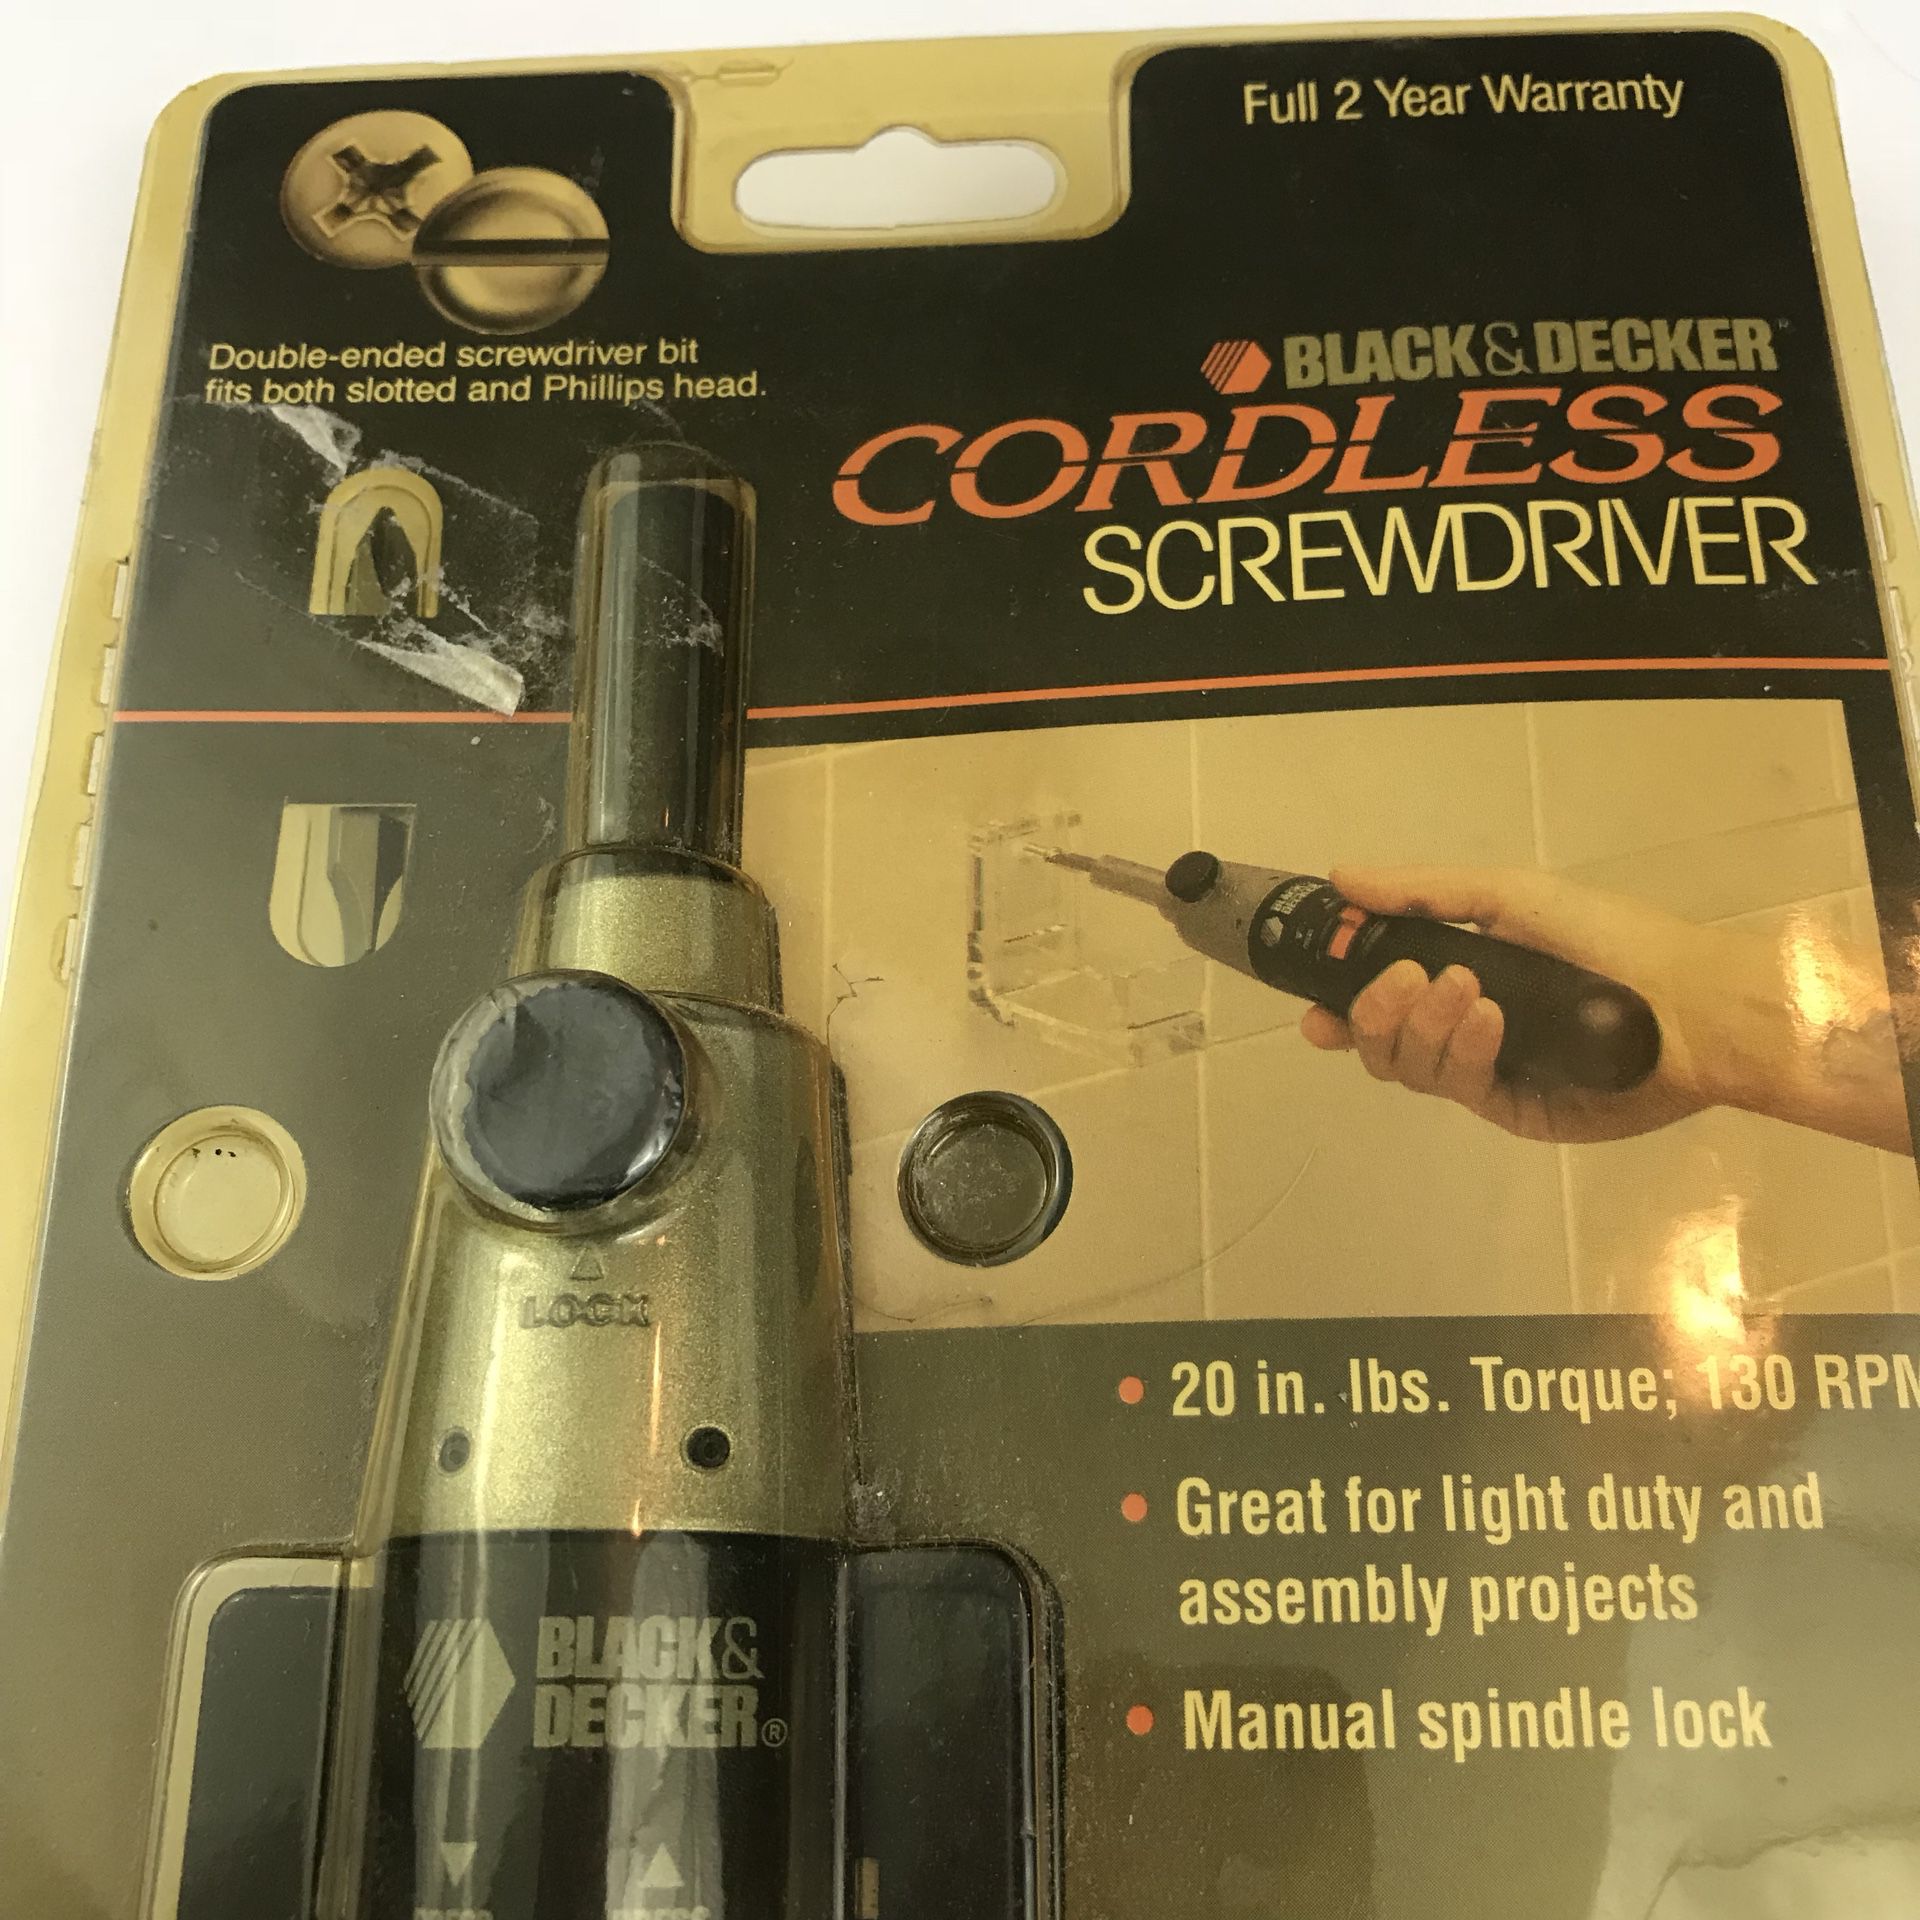 Black & Decker Cordless Screwdriver 9018 NO / Charger